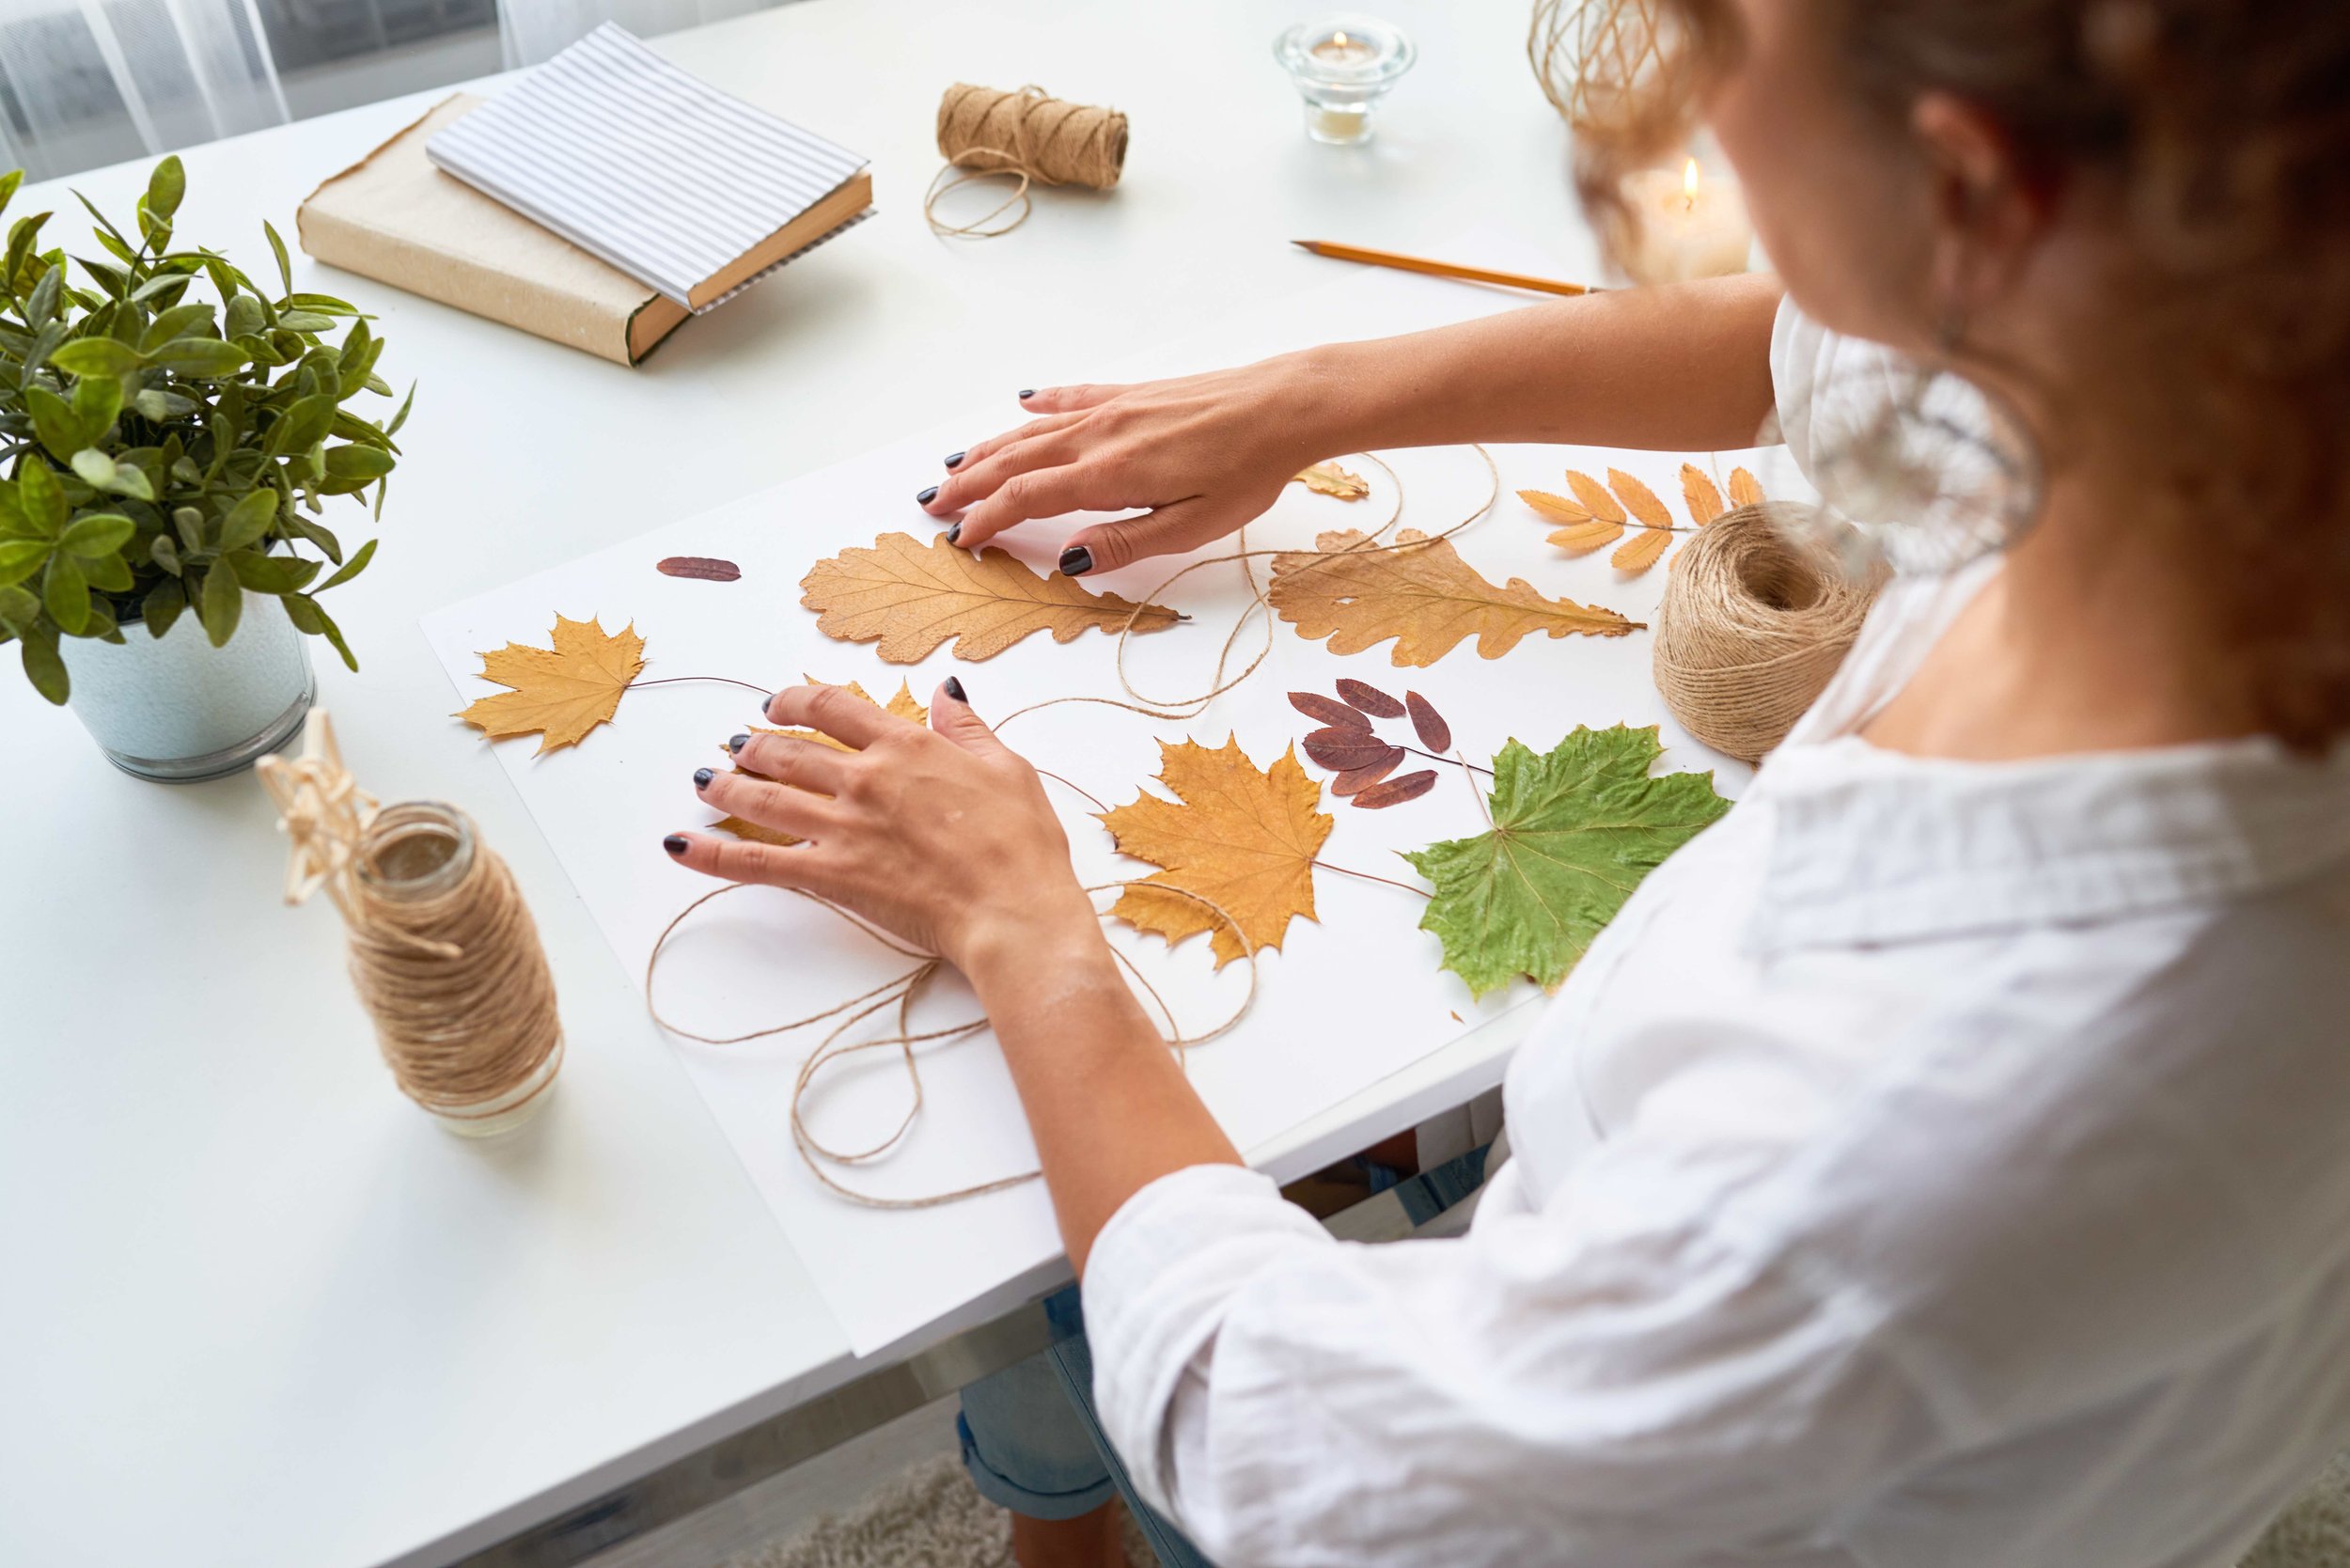 handmade-autumn-crafts-2021-09-24-03-47-42-utc.jpeg